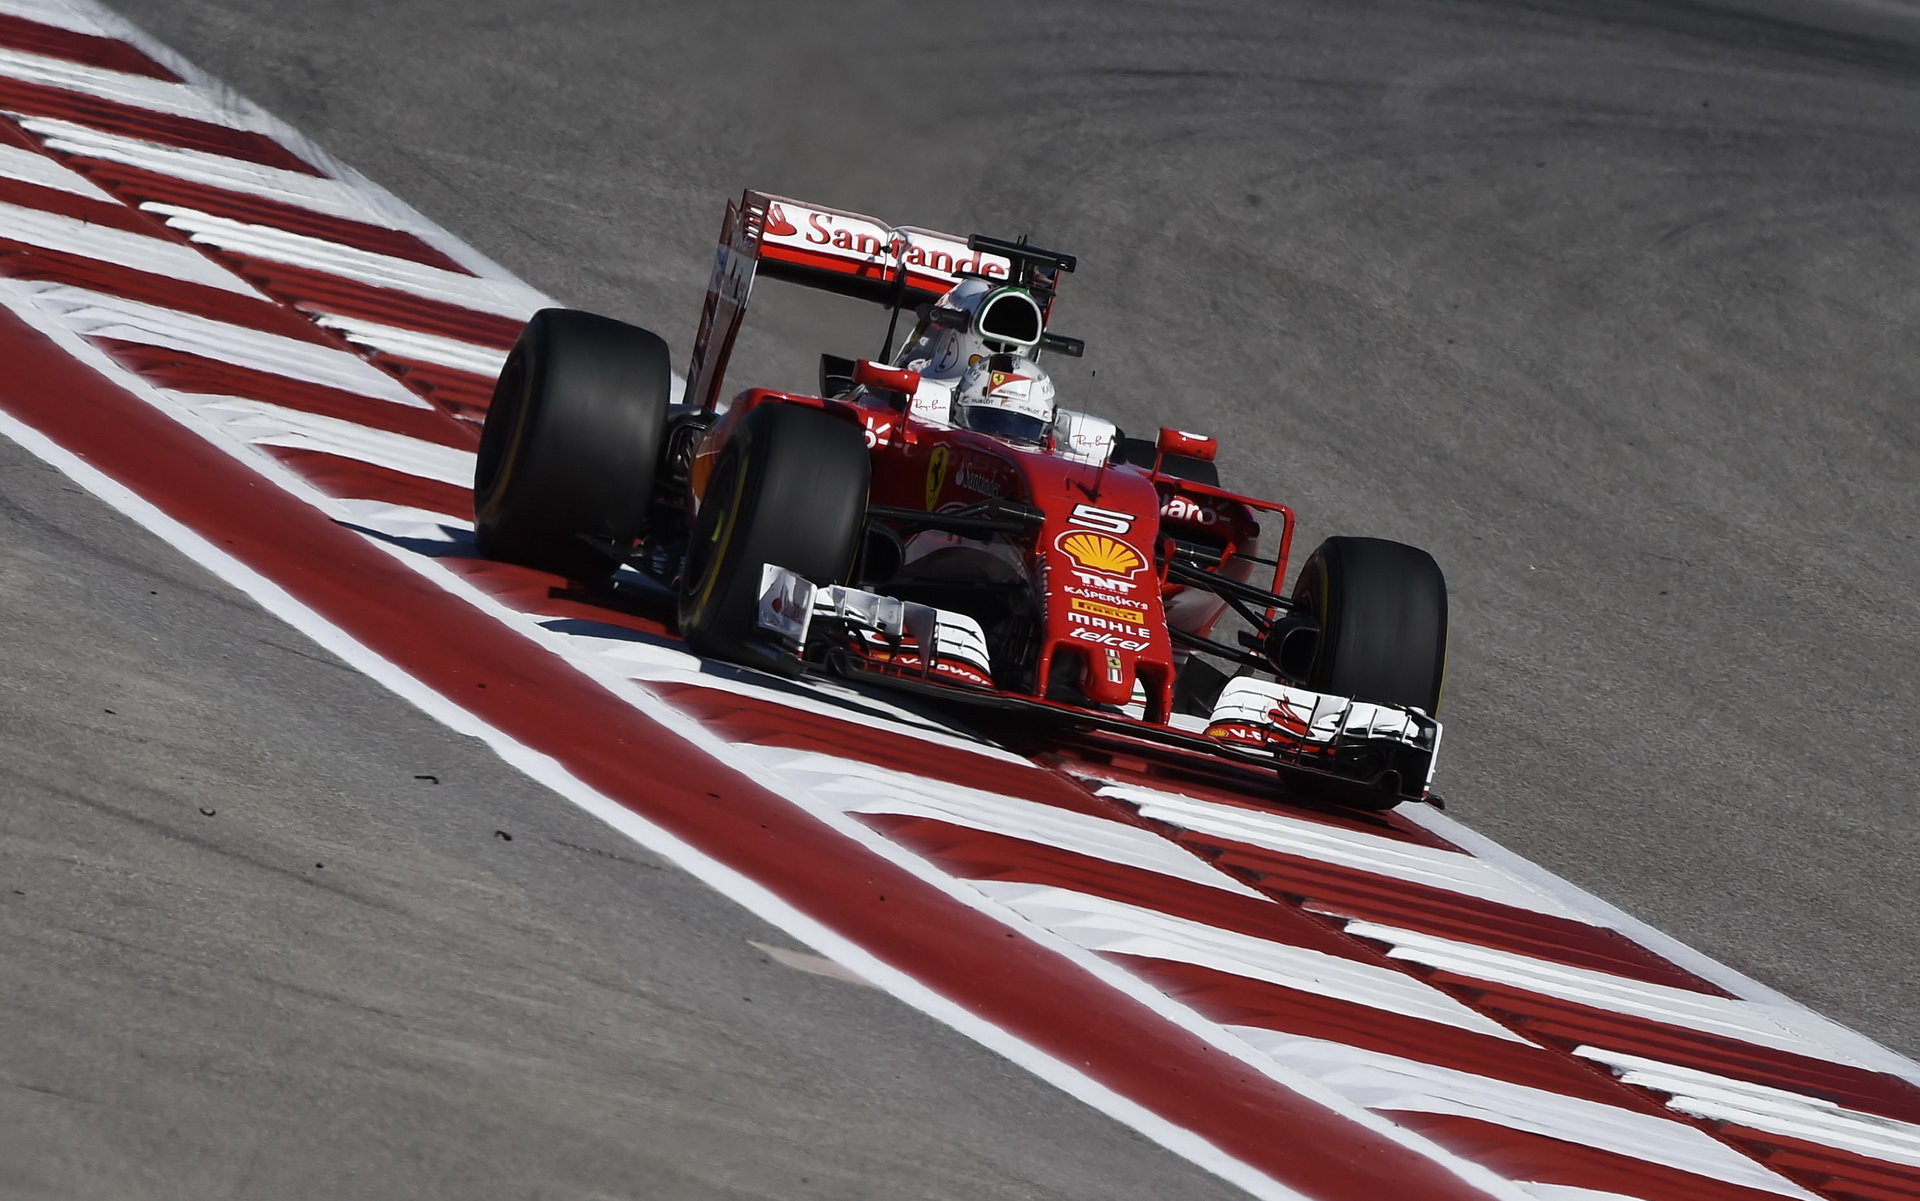 Do Vettela a Ferrari vkládá Ecclestone velké naděje